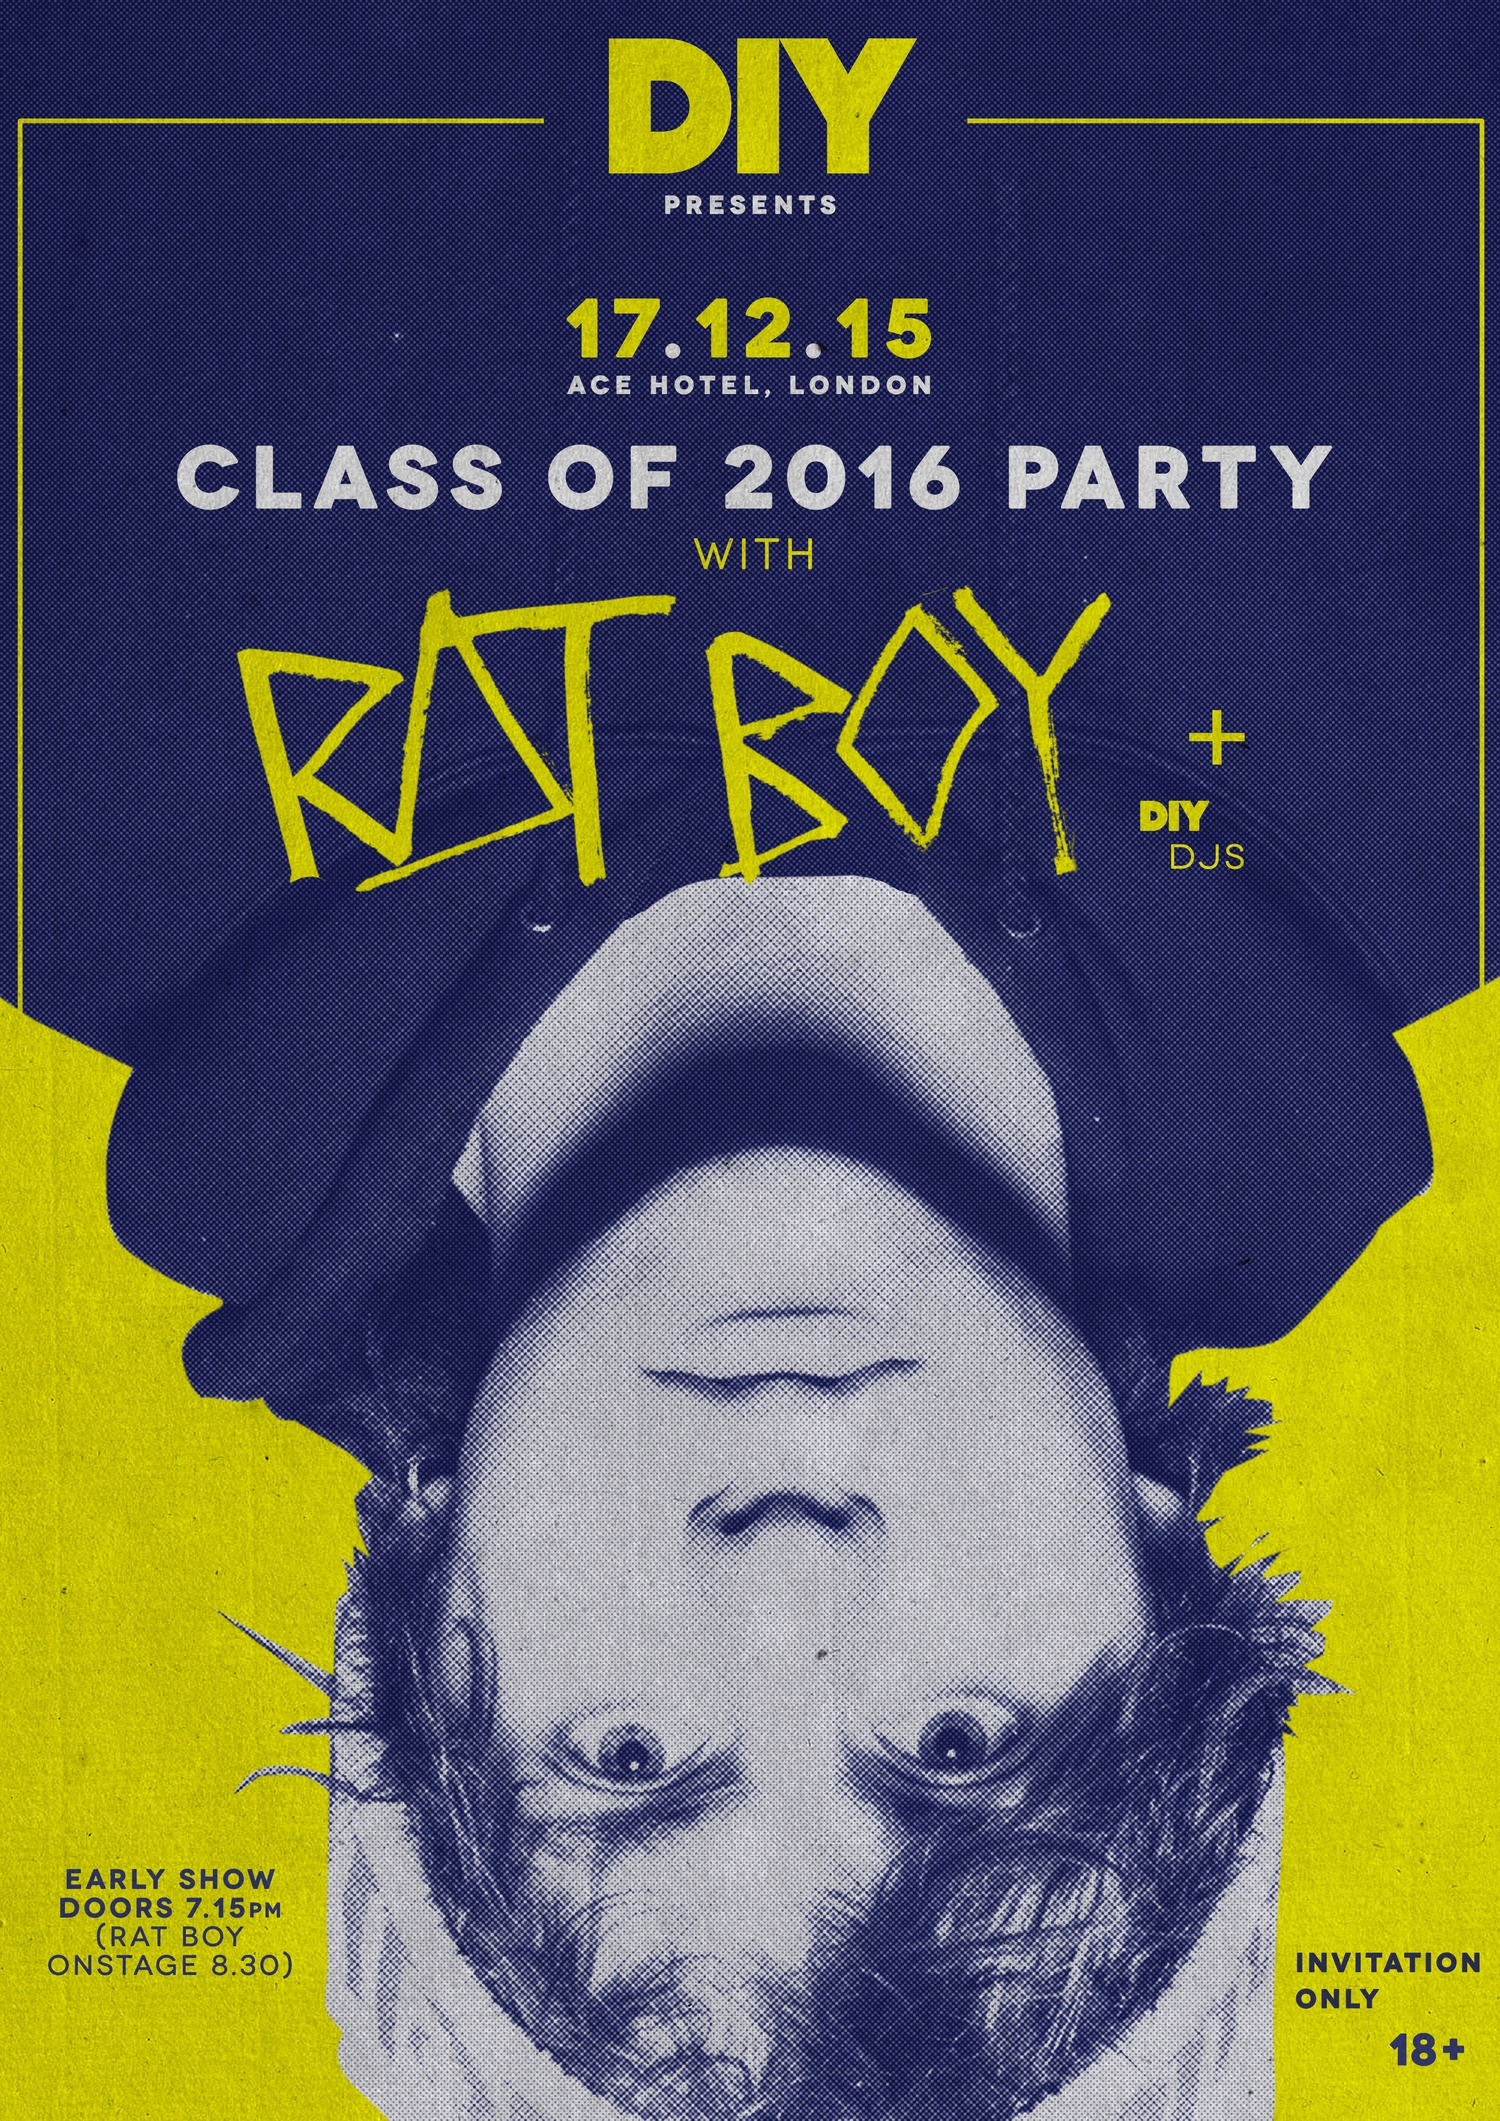 Rat Boy to headline DIY Class of 2016 party